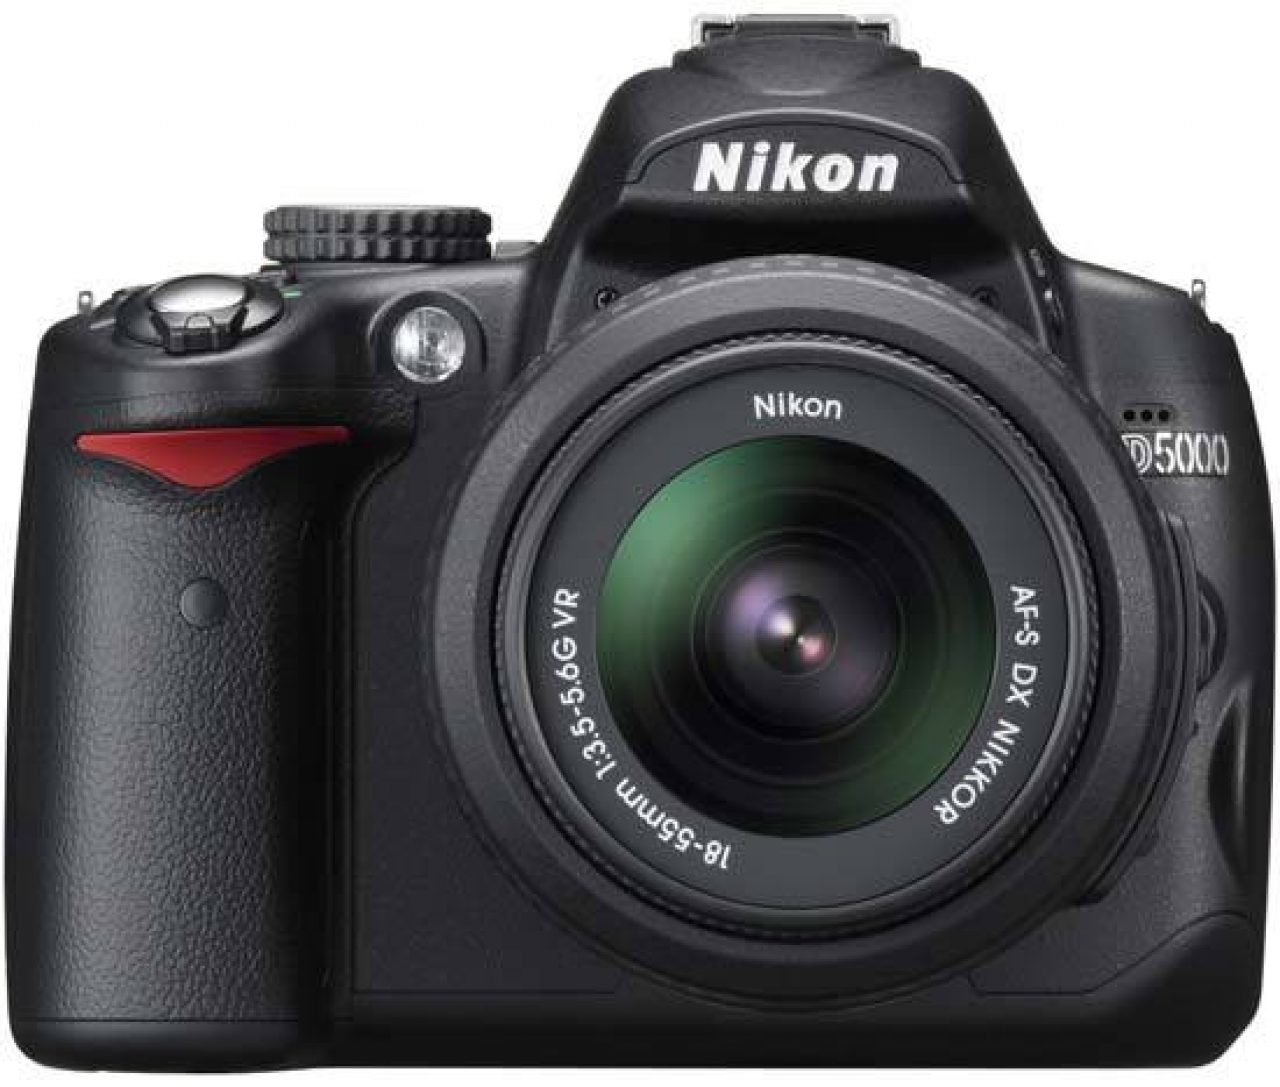 Genuine Nikon DK-24 Rubber Eyecup for D5000 Digital Camera 